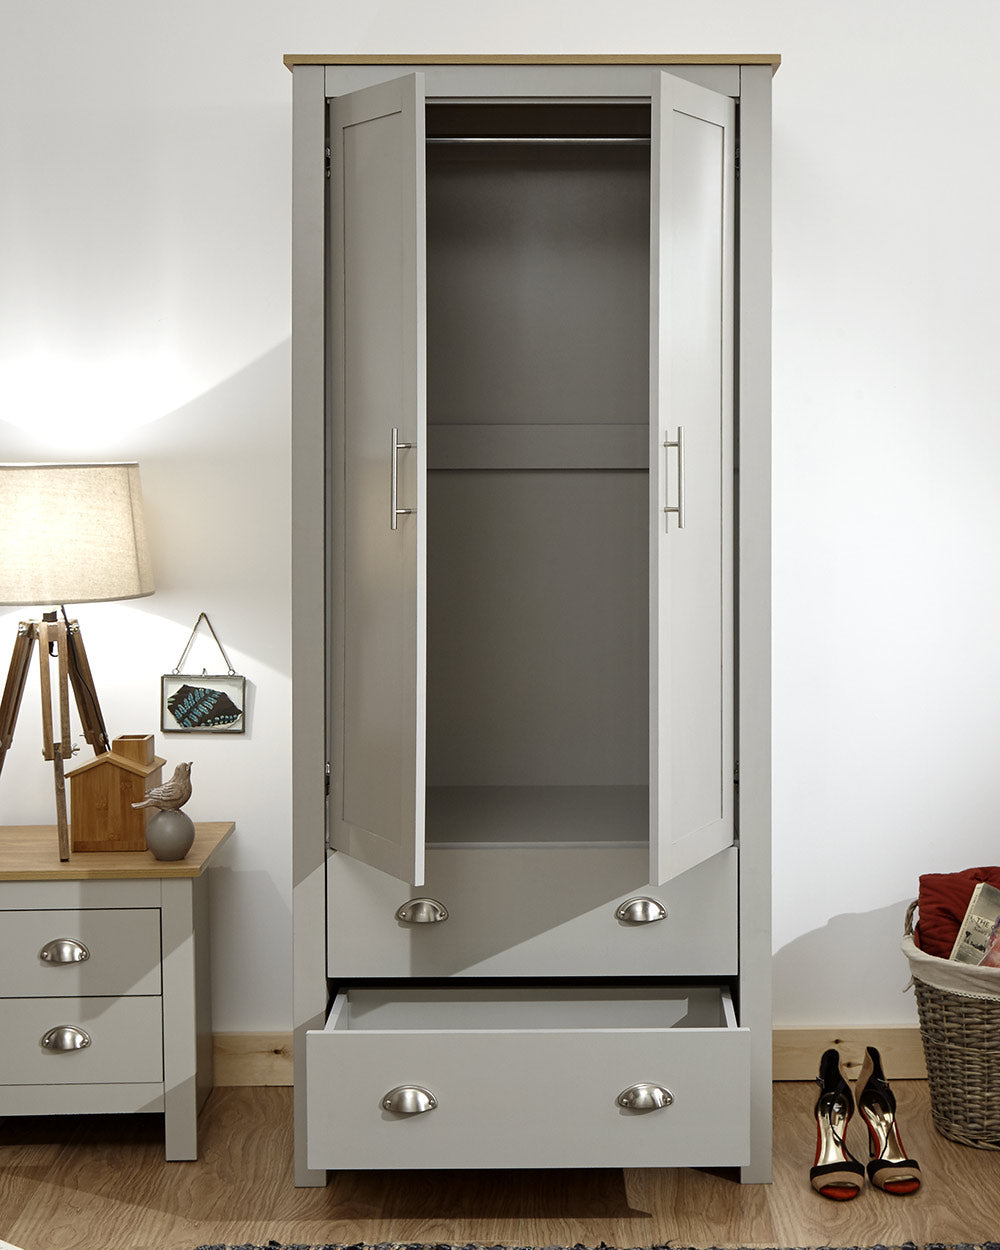 Lancaster 2 Door 2 Drawer wardrobe in sleek grey with an oak effect top in a bedroom setting doors open with an empty space 